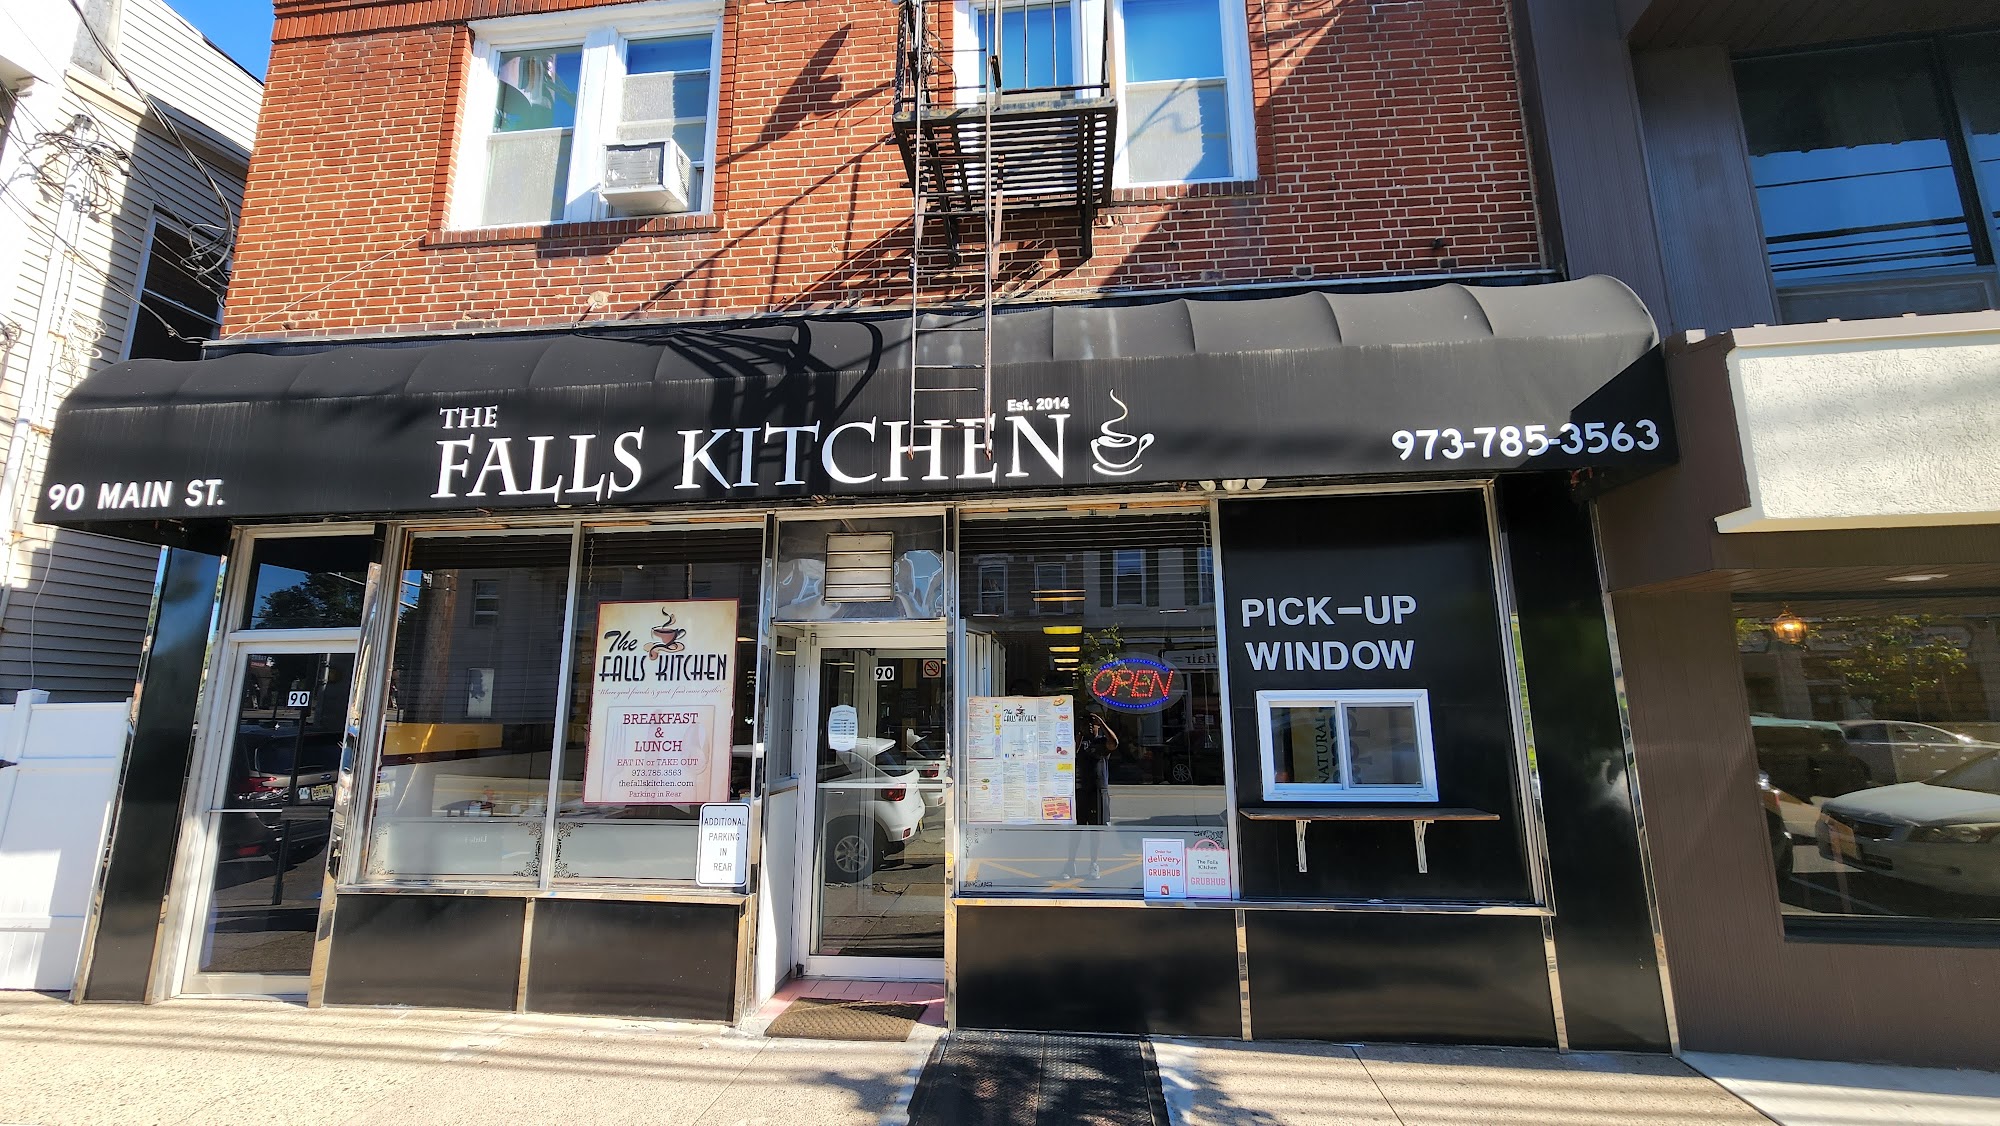 The Falls Kitchen